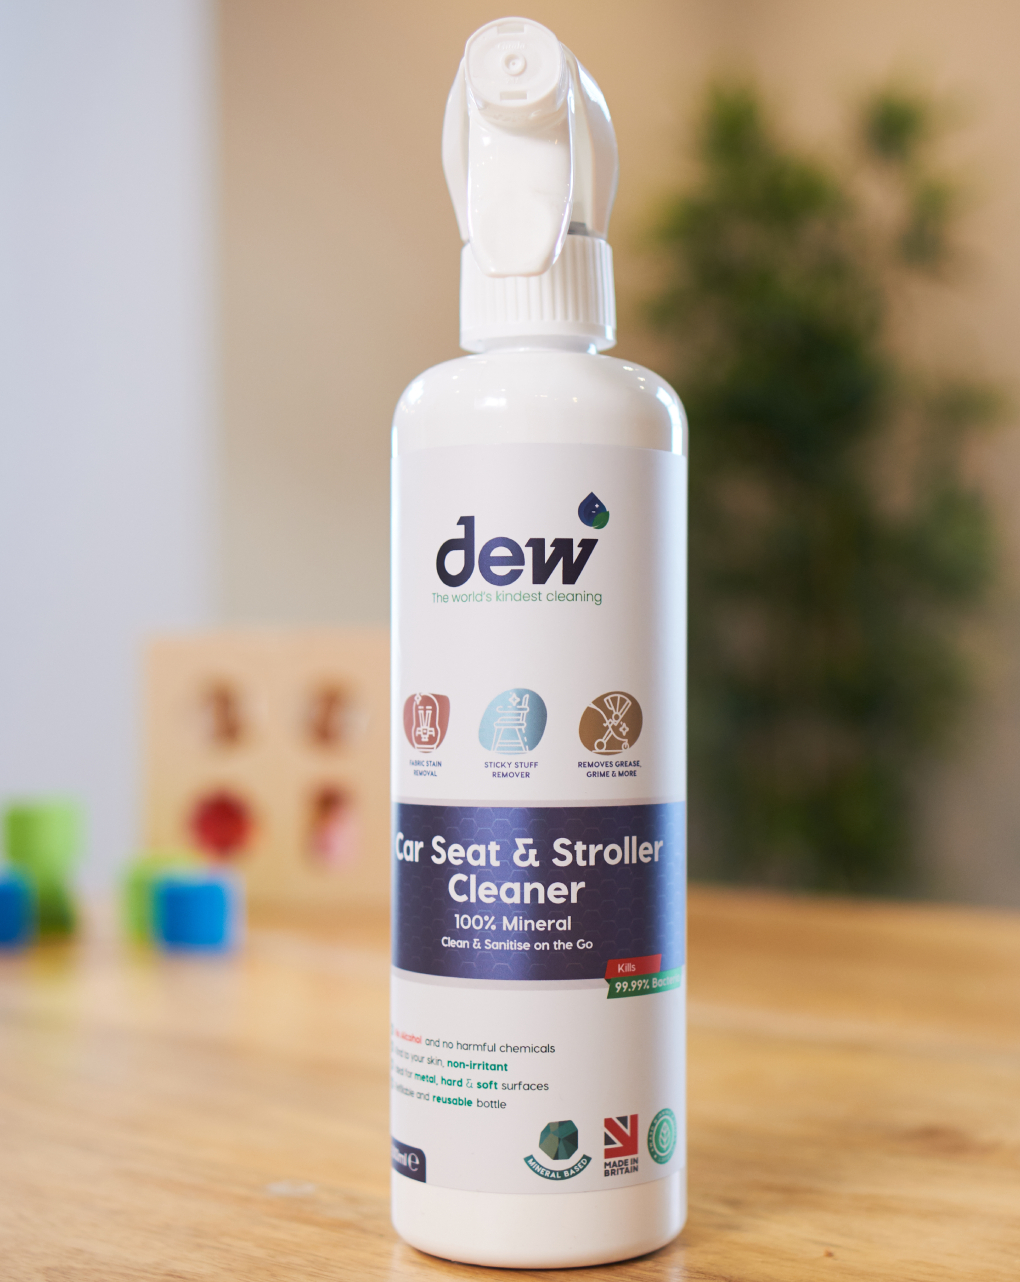 Dew καθαριστικό-απολυμαντικό καροτσιού/ καθίσματος αυτοκινήτου, χωρίς τοξικά χημικά, 500ml eco/1100200375 - Dew